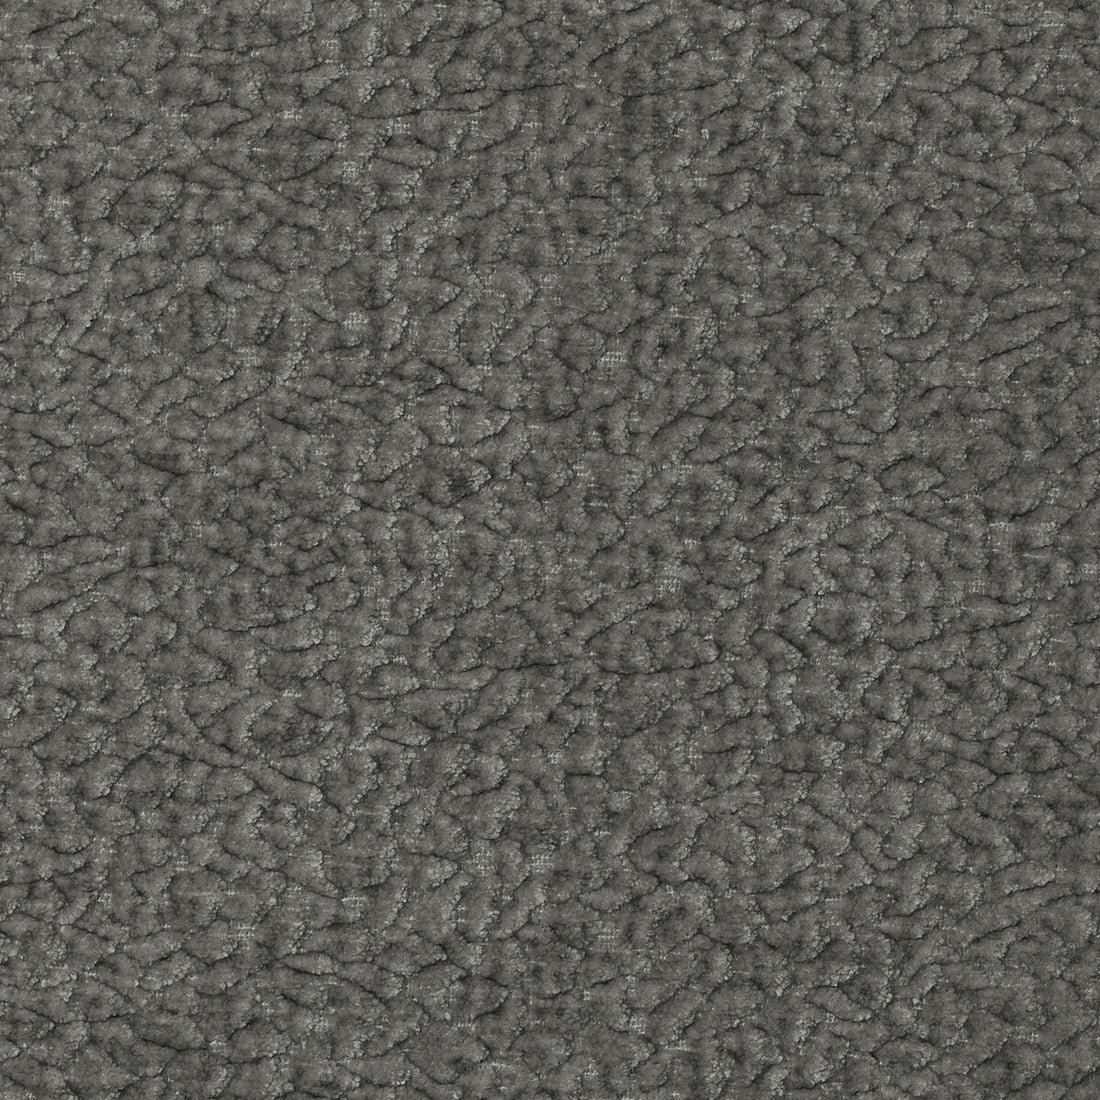 Barton Chenille fabric in vapor color - pattern 36074.106.0 - by Kravet Smart